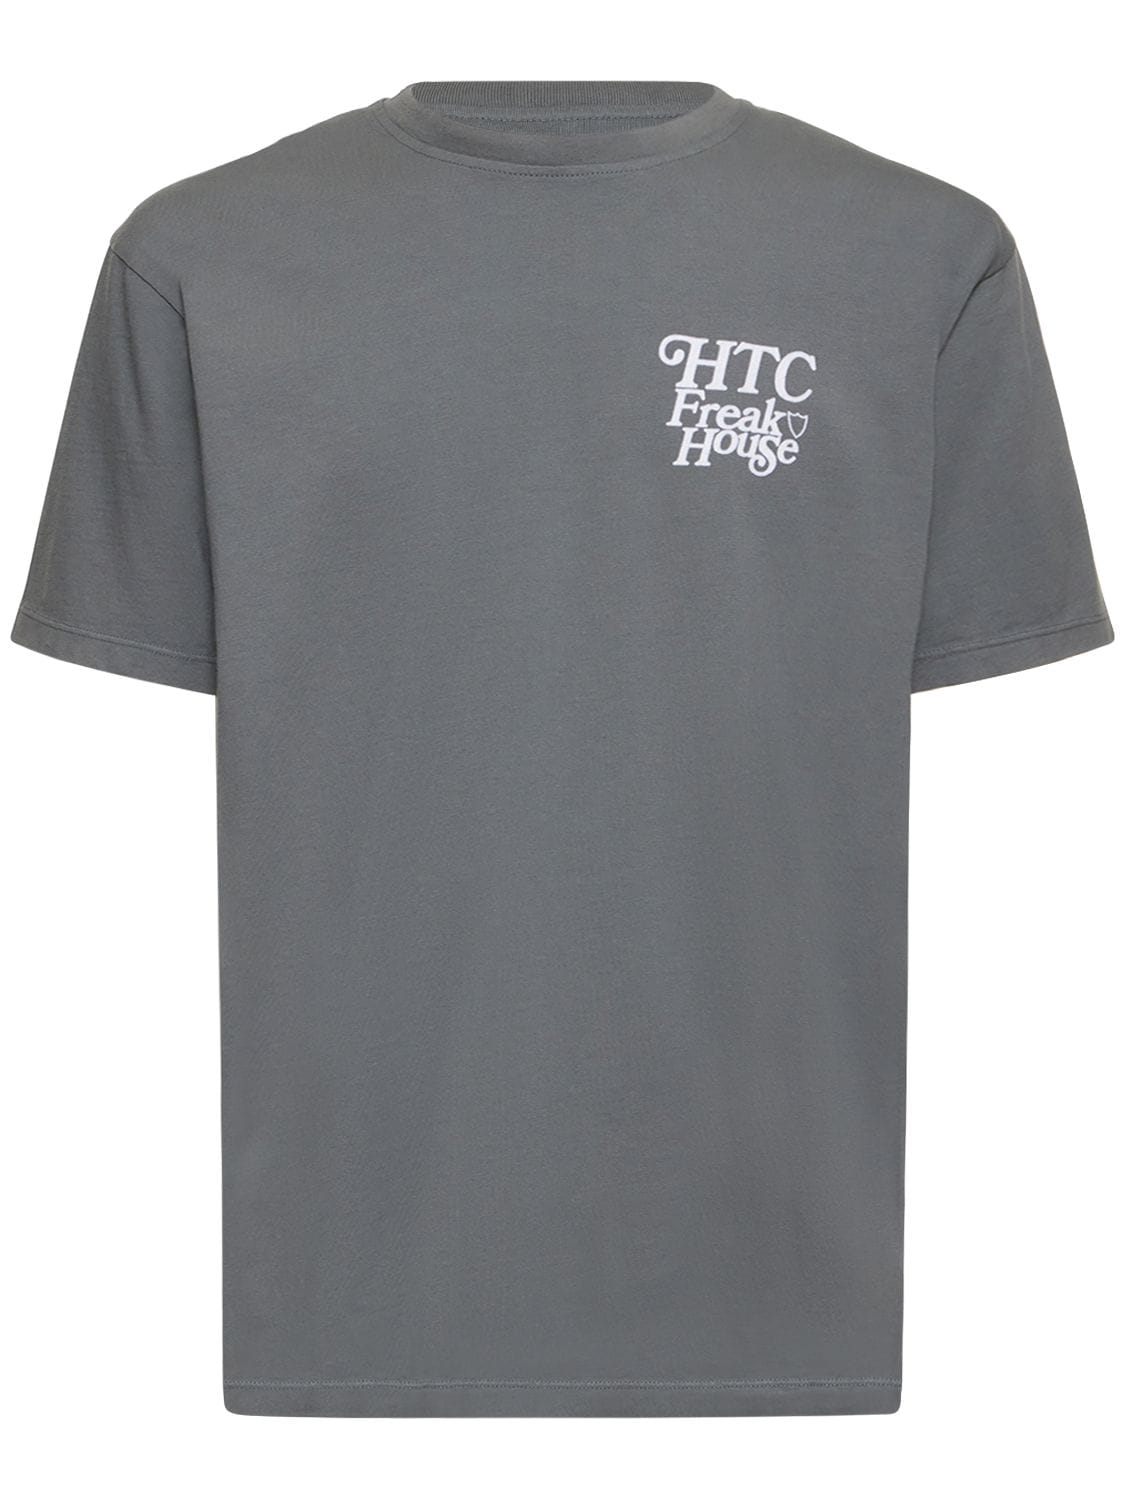 HTC LOS ANGELES Freak House Print Cotton Jersey T-shirt